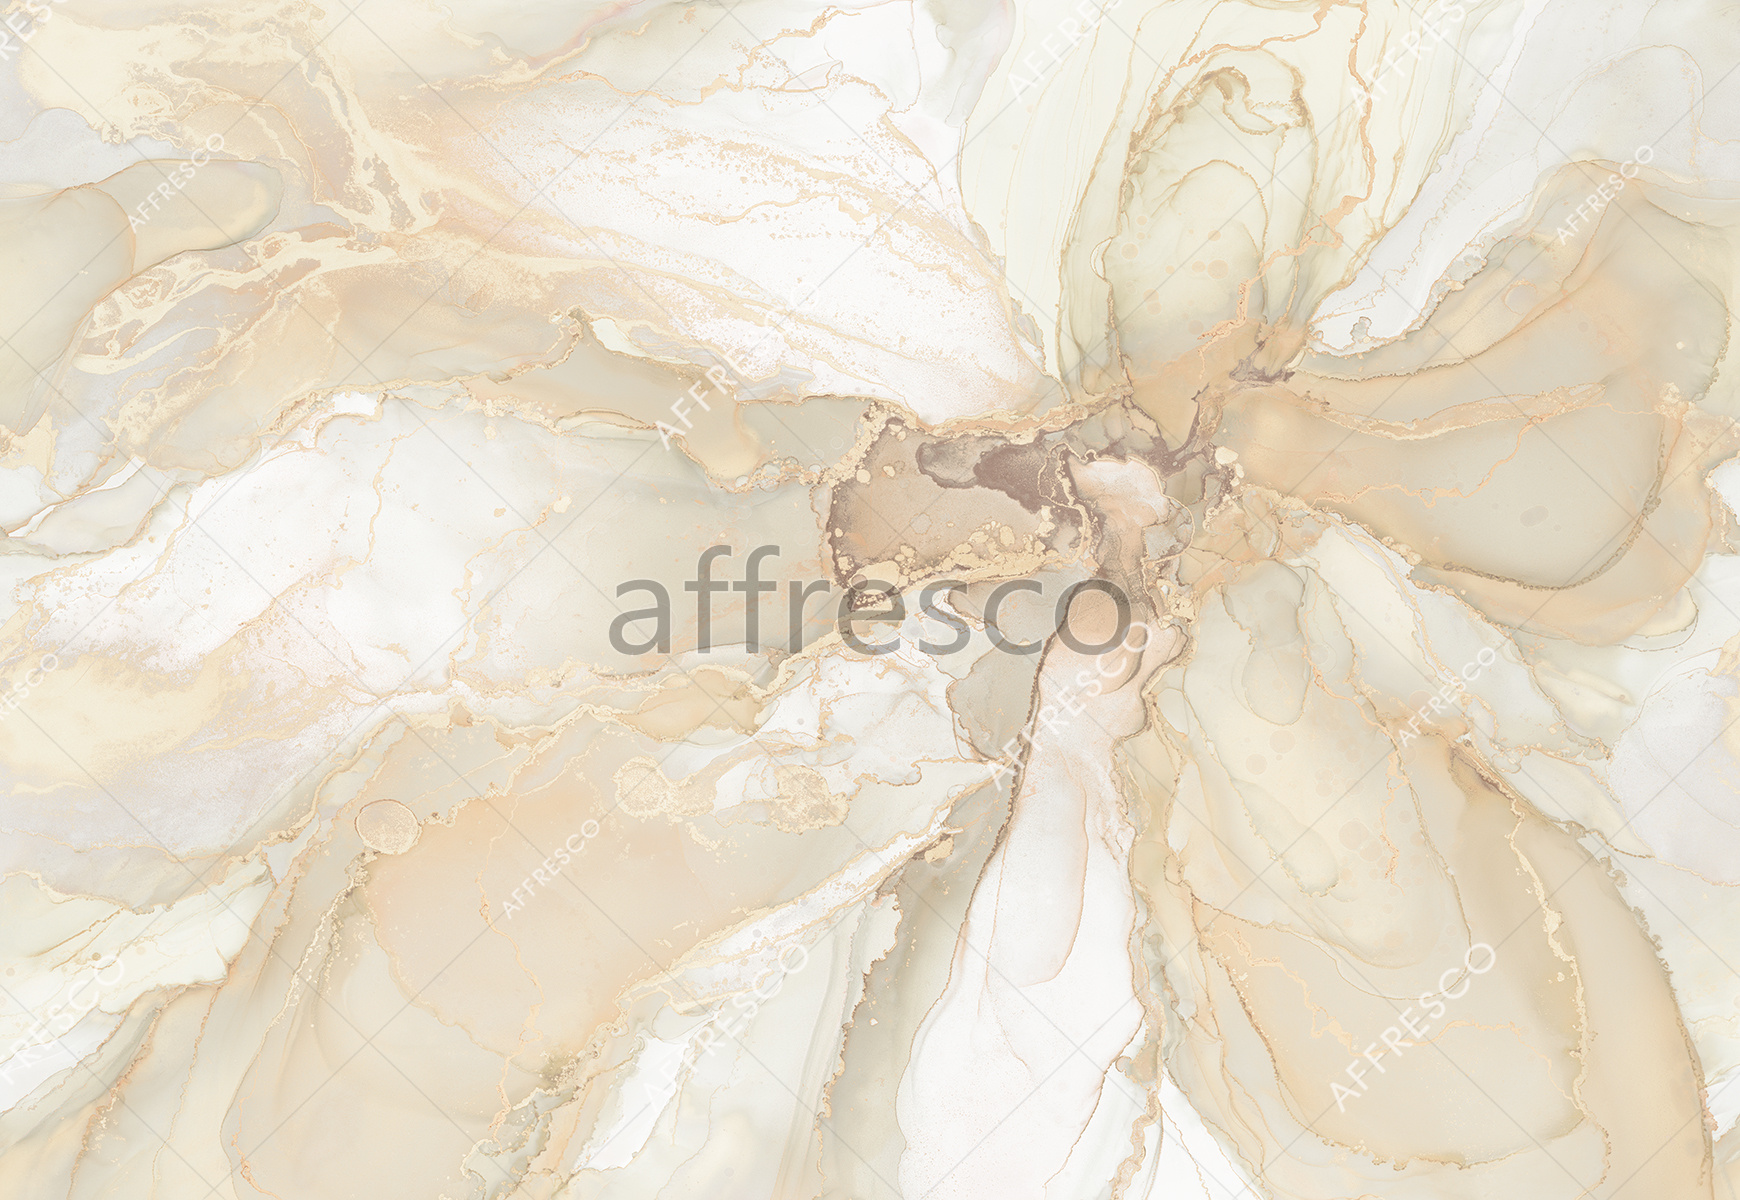 ID138707 | Textures |  | Affresco Factory